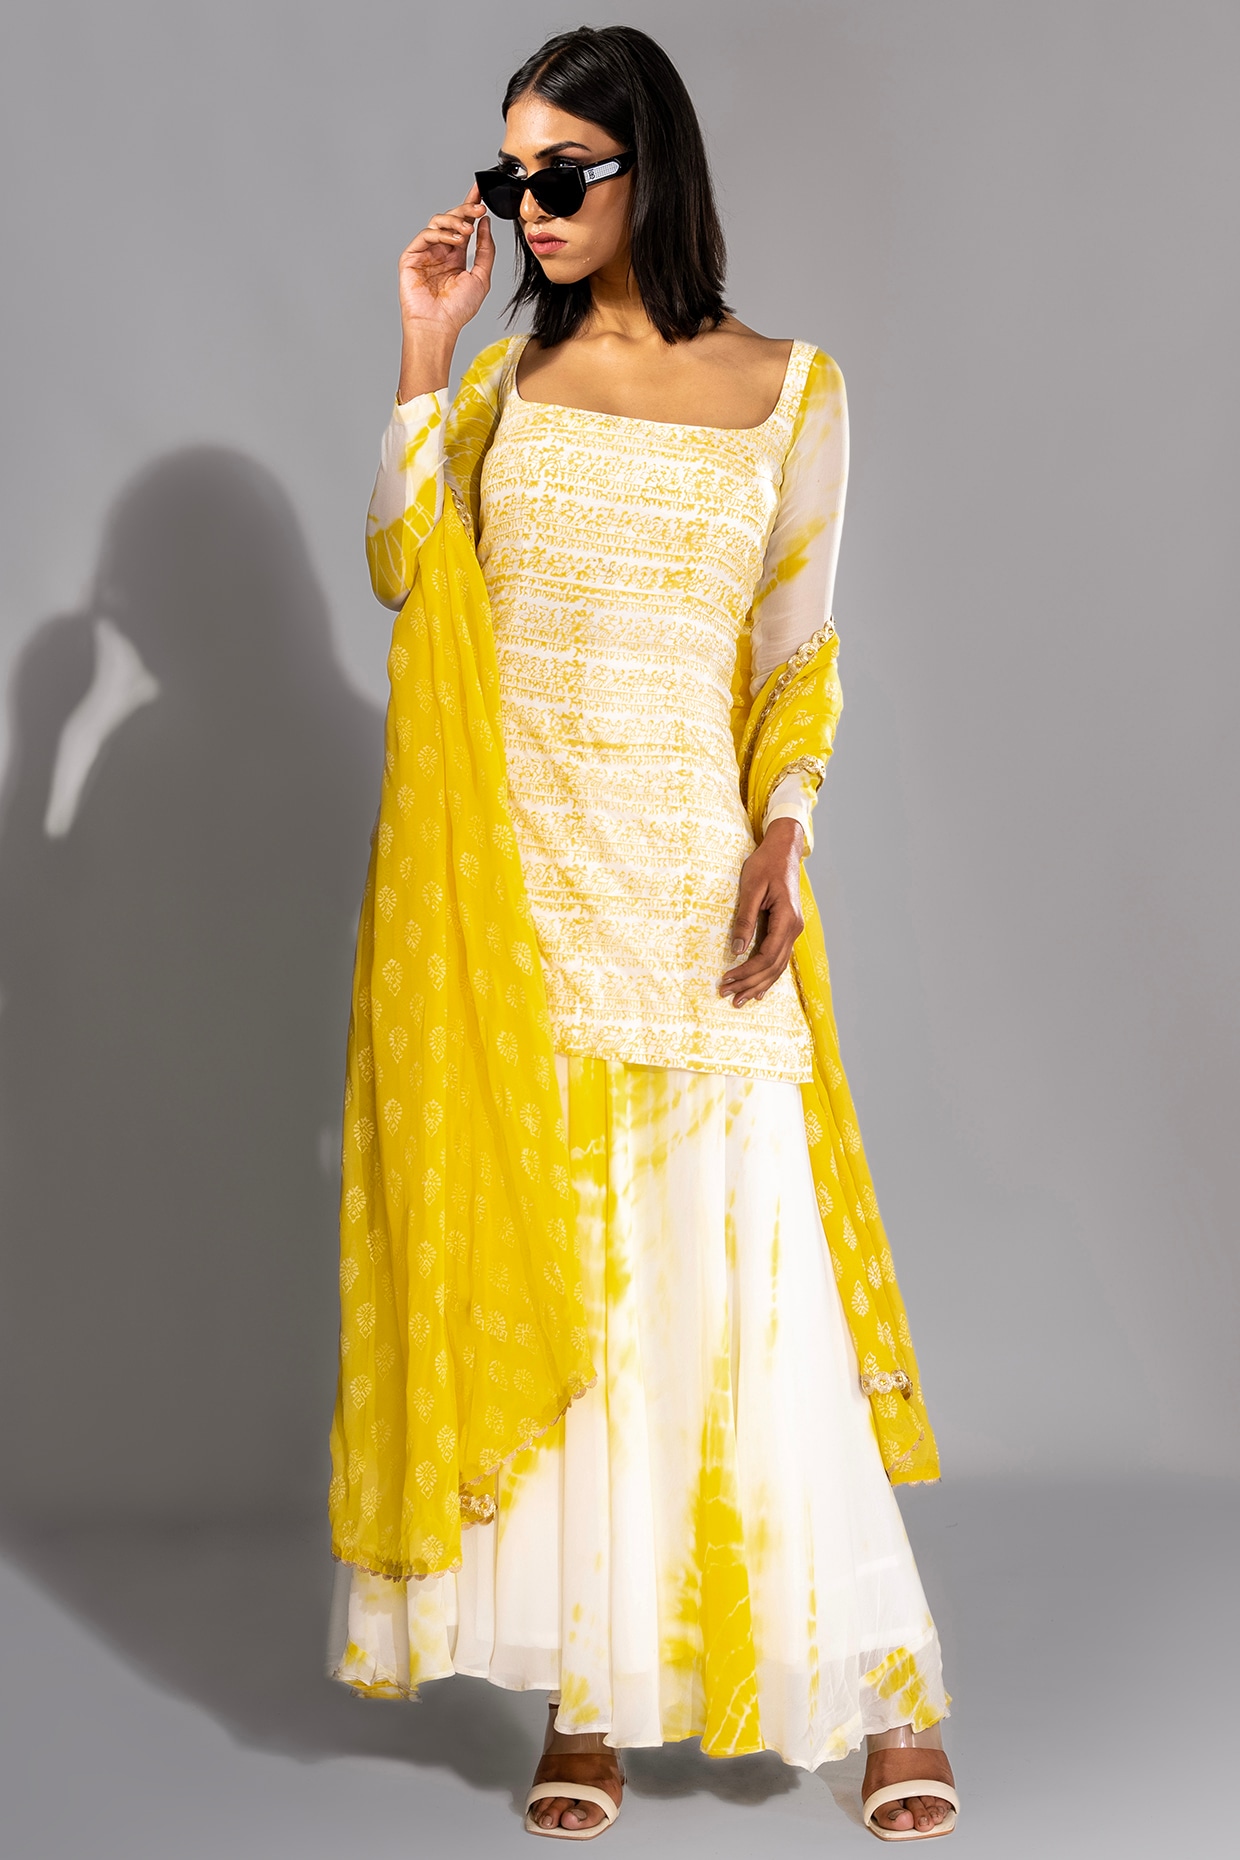 Haldi Function Designer Sharara Suit | Wedding Bridal Engagement Dress